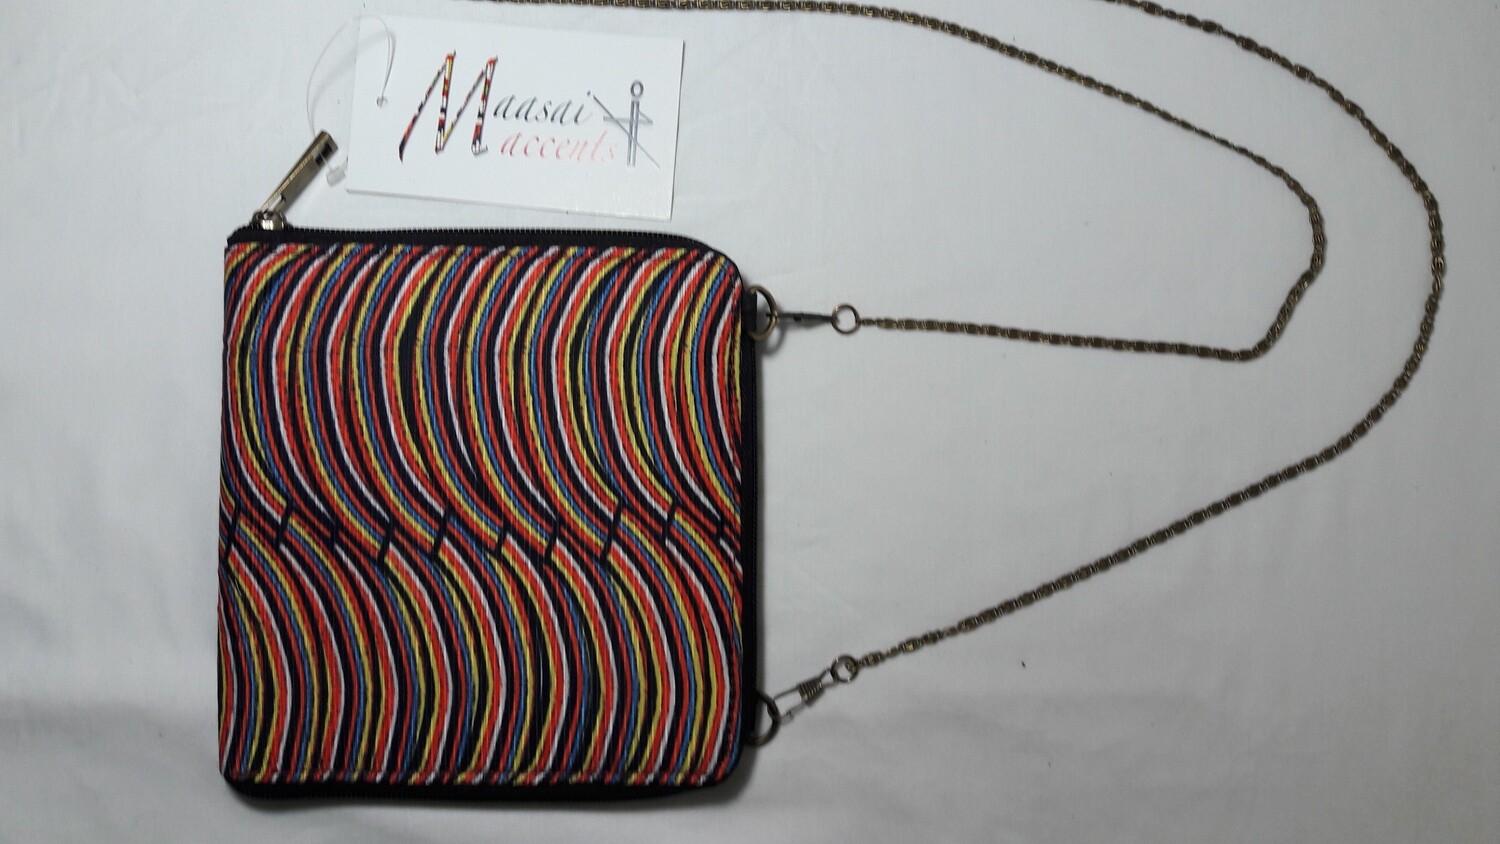 Maasai Accents®, Eremit beadwork print, IPad
bag Polyester canvas, abstraction of Emerit
beadwork print, IPad bag #MAS05-01